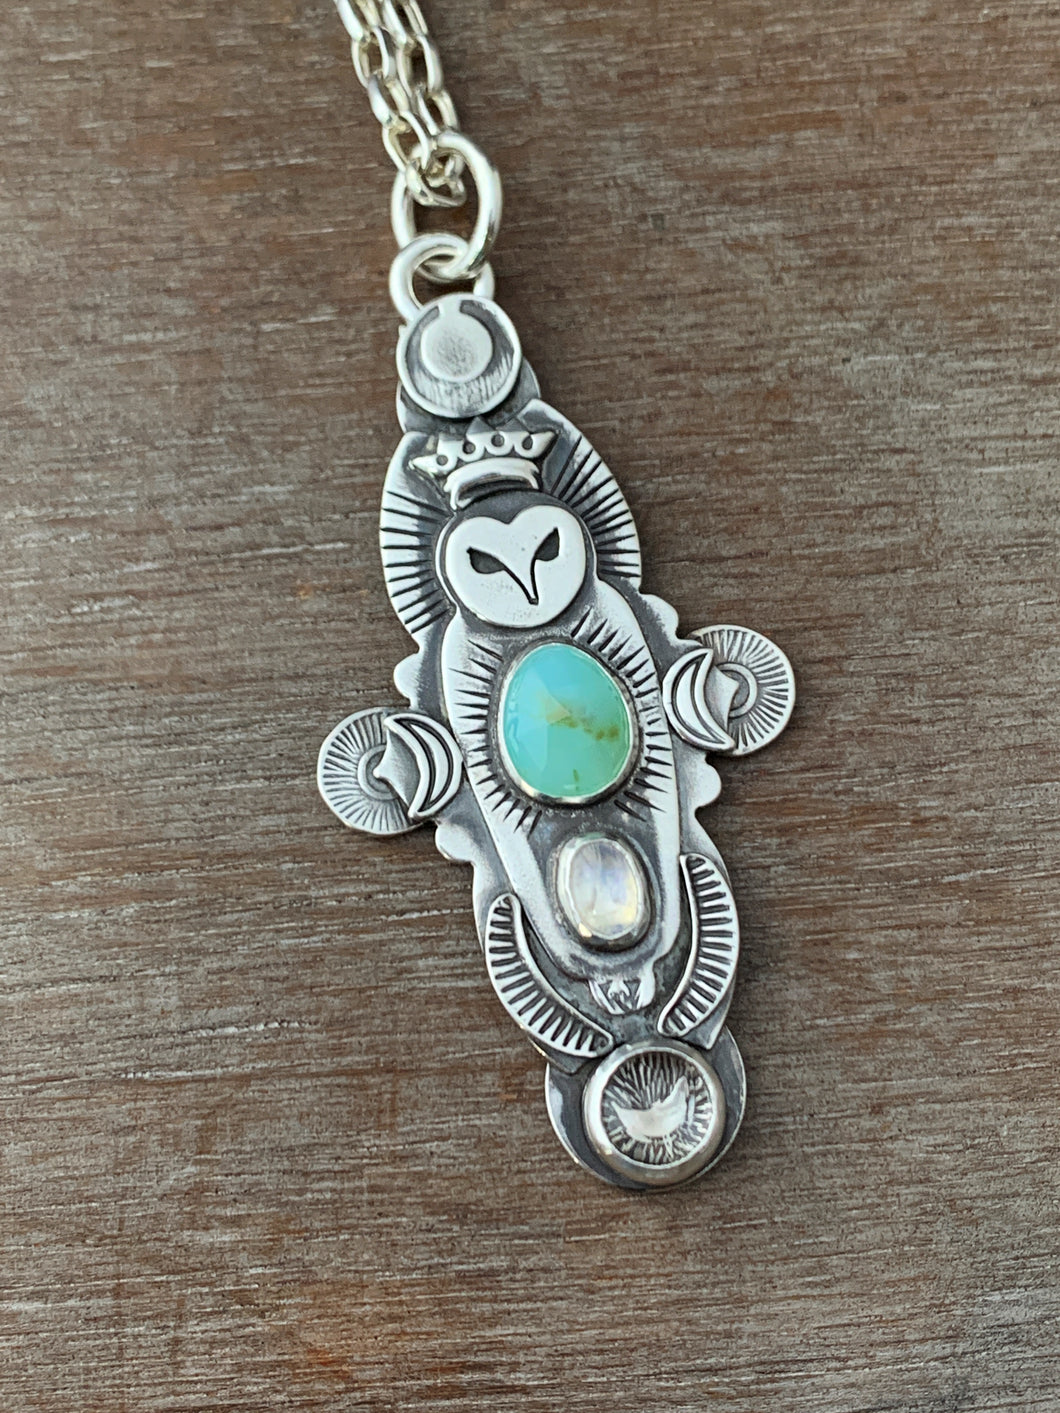 Owl pendant #1 - Peruvian Opal Rainbow Moonstone and Clear Quartz